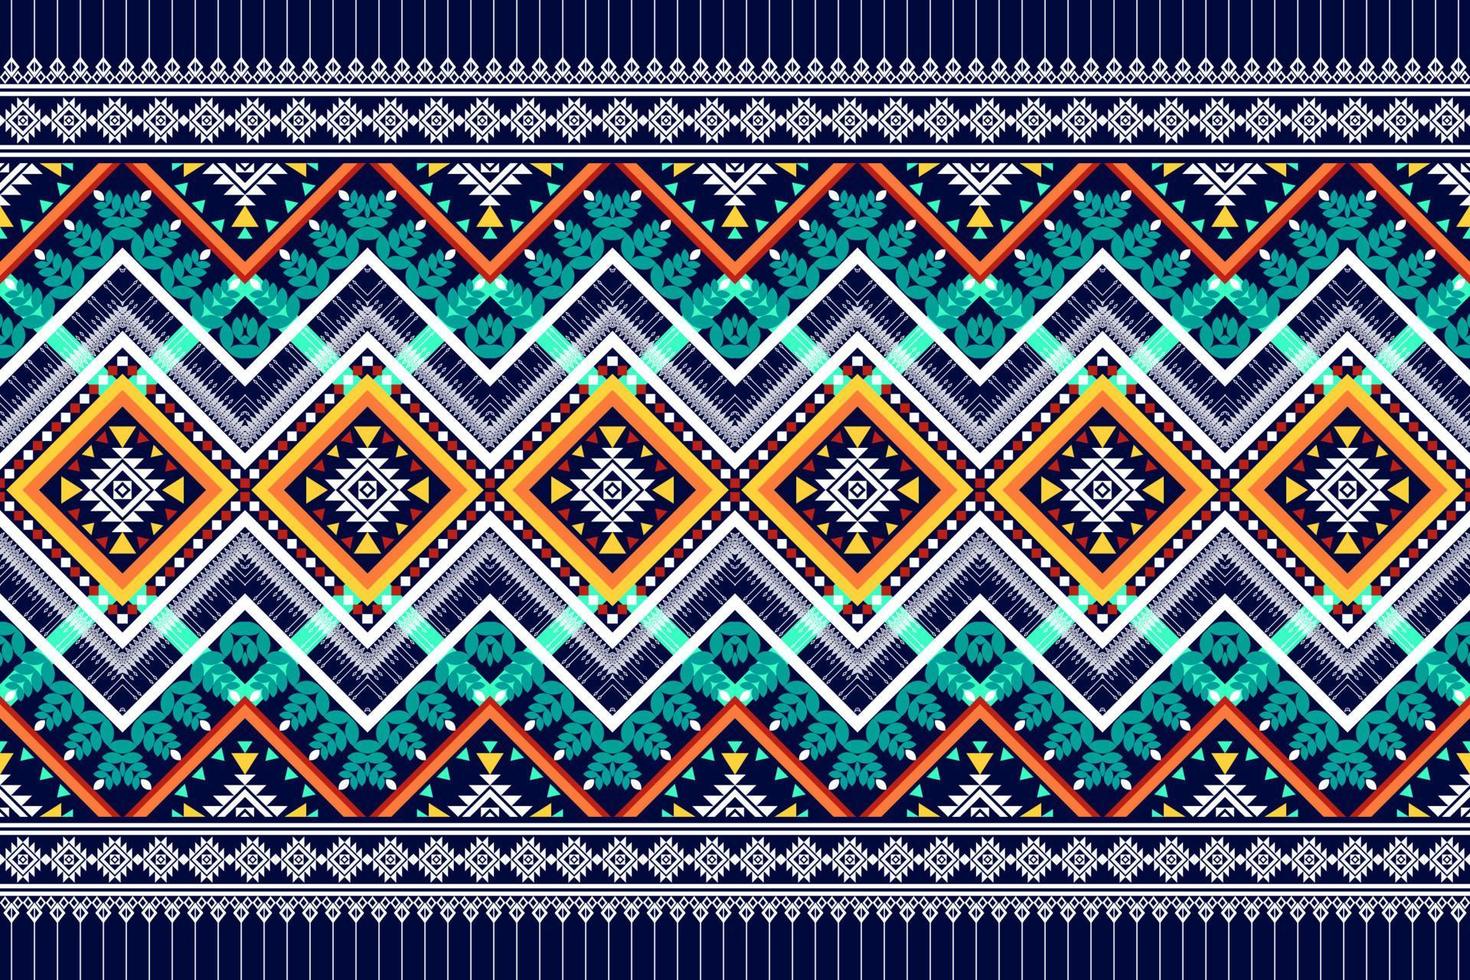 geometrisk etnisk sömlös design. Aztec tyg matta mandala prydnad chevron textil dekoration tapeter. tribal kalkon afrikansk indisk traditionell broderi vektor illustration bakgrund